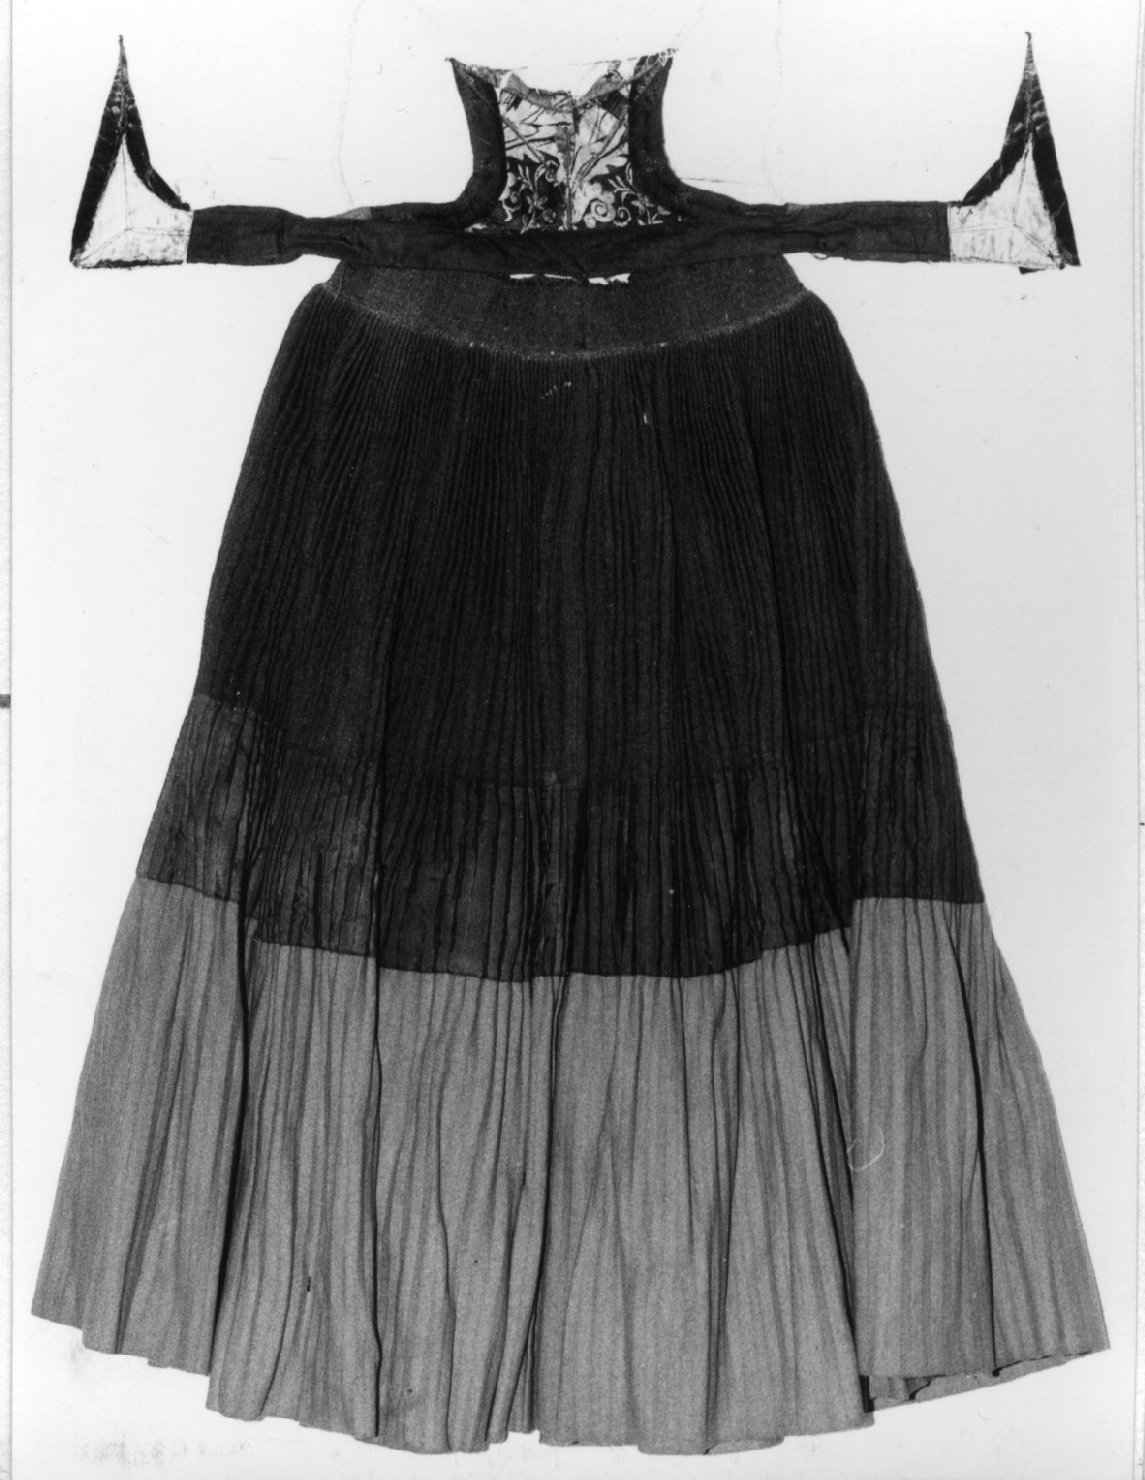 gonna, costume femminile - manifattura sarda (sec. XIX)